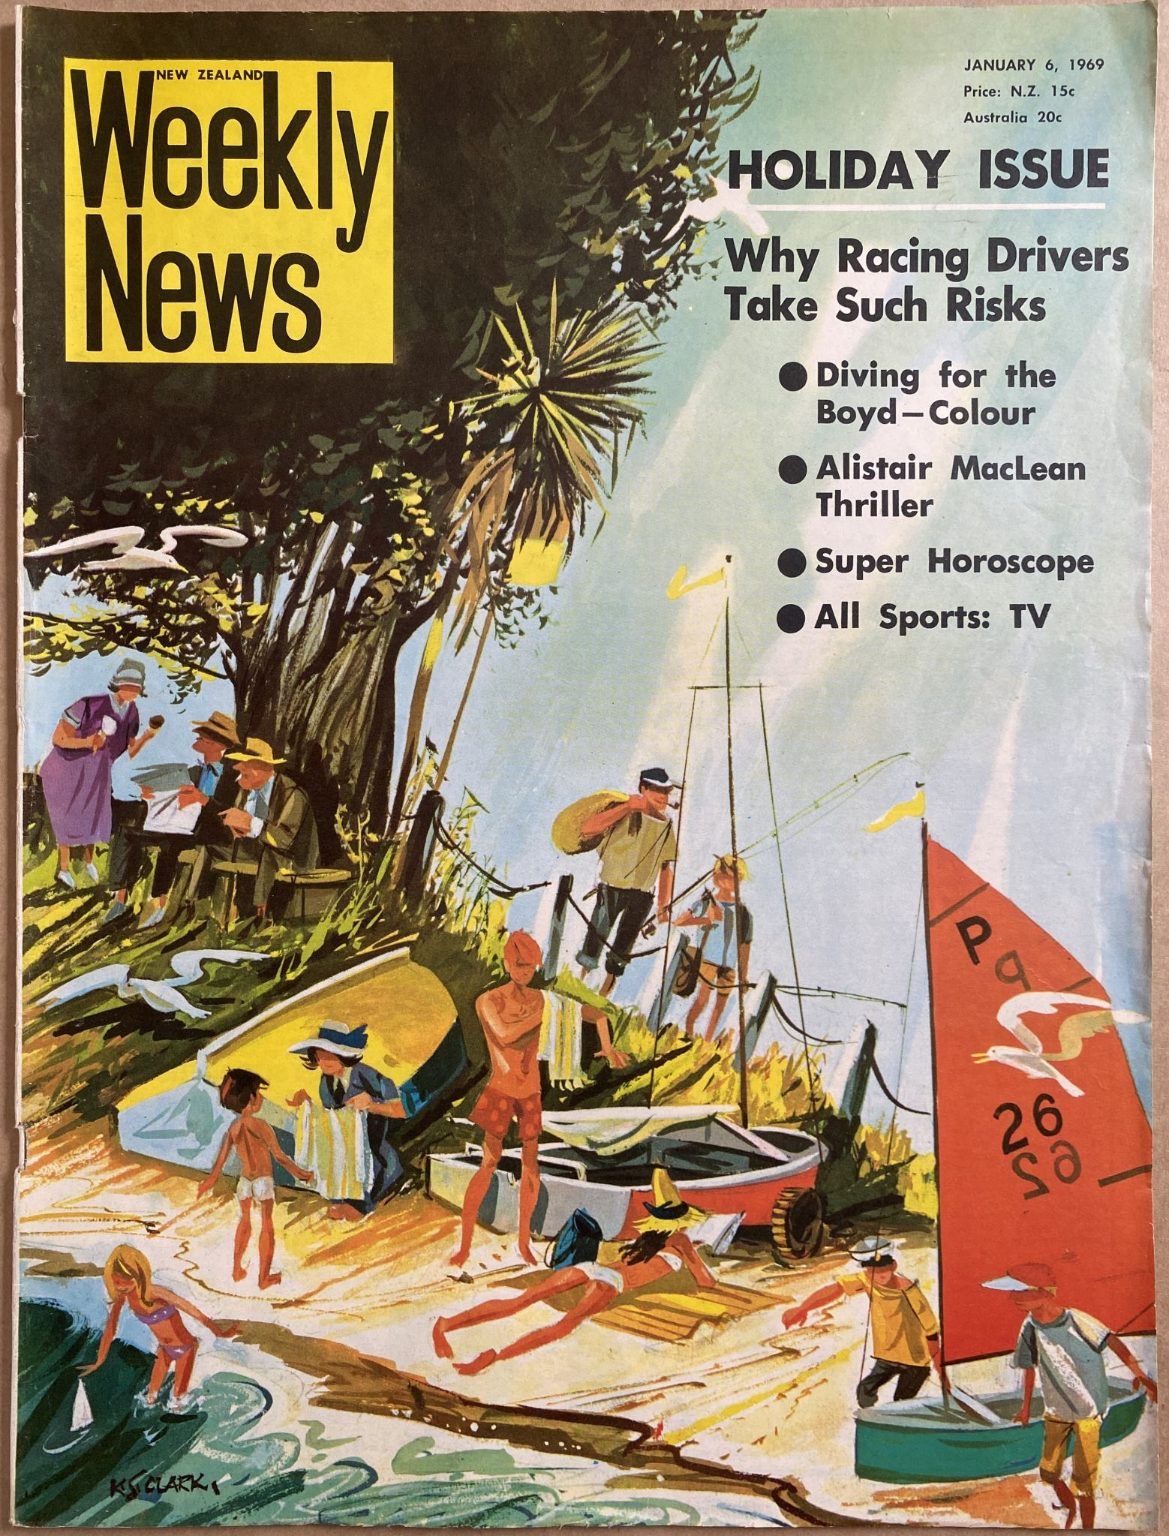 OLD NEWSPAPER: New Zealand Weekly News, 6 January 1969